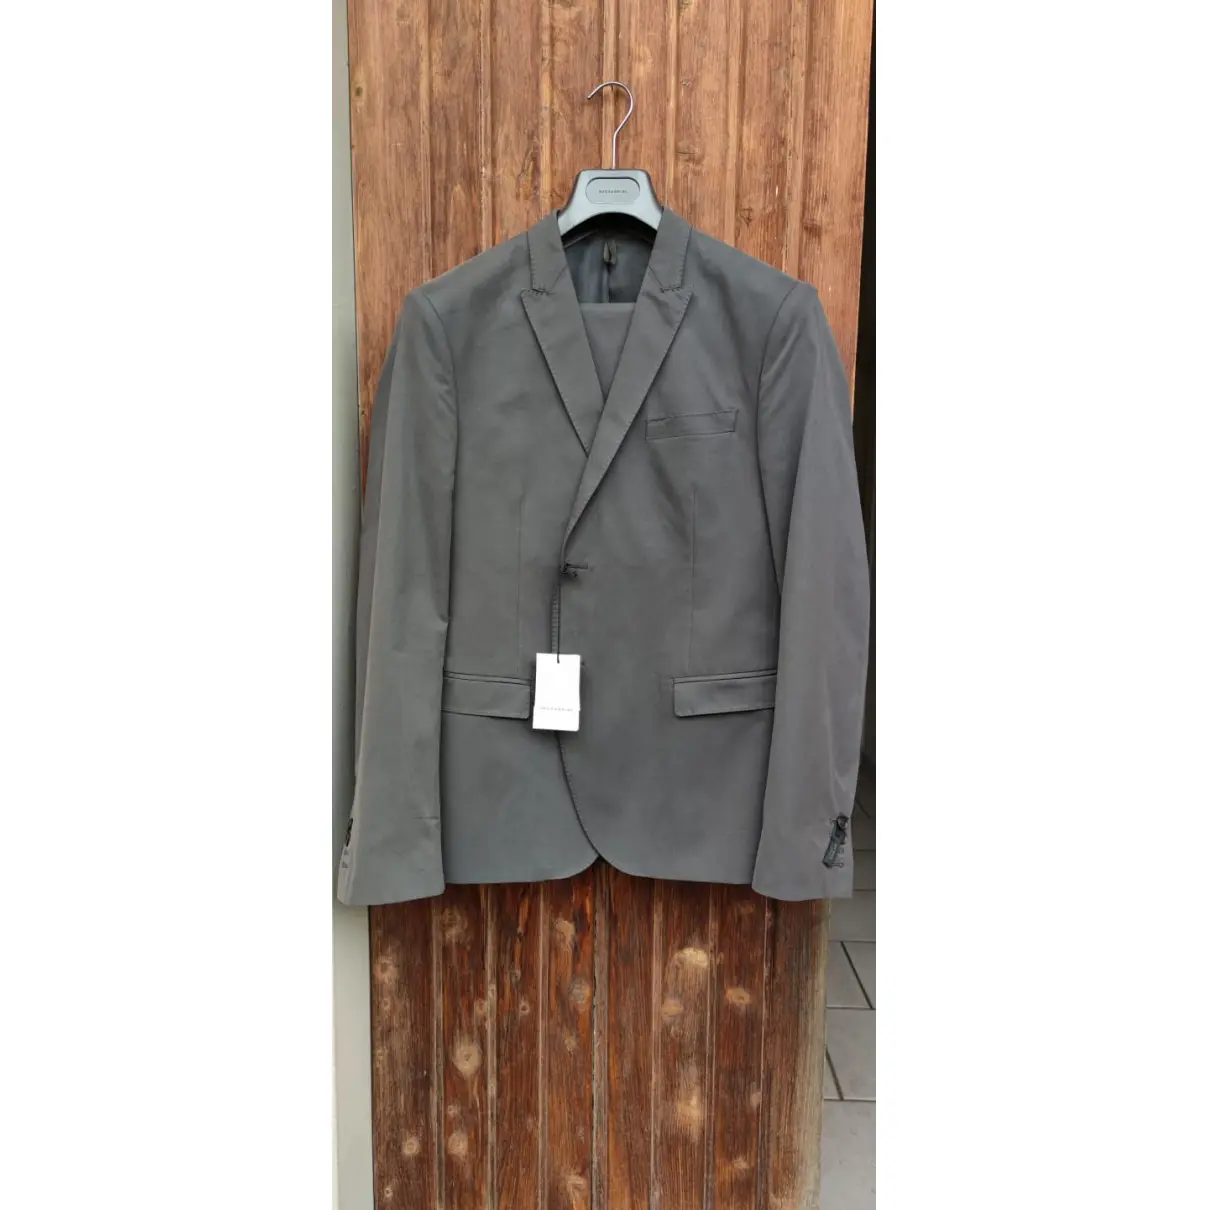 Buy Gazzarrini Suit online